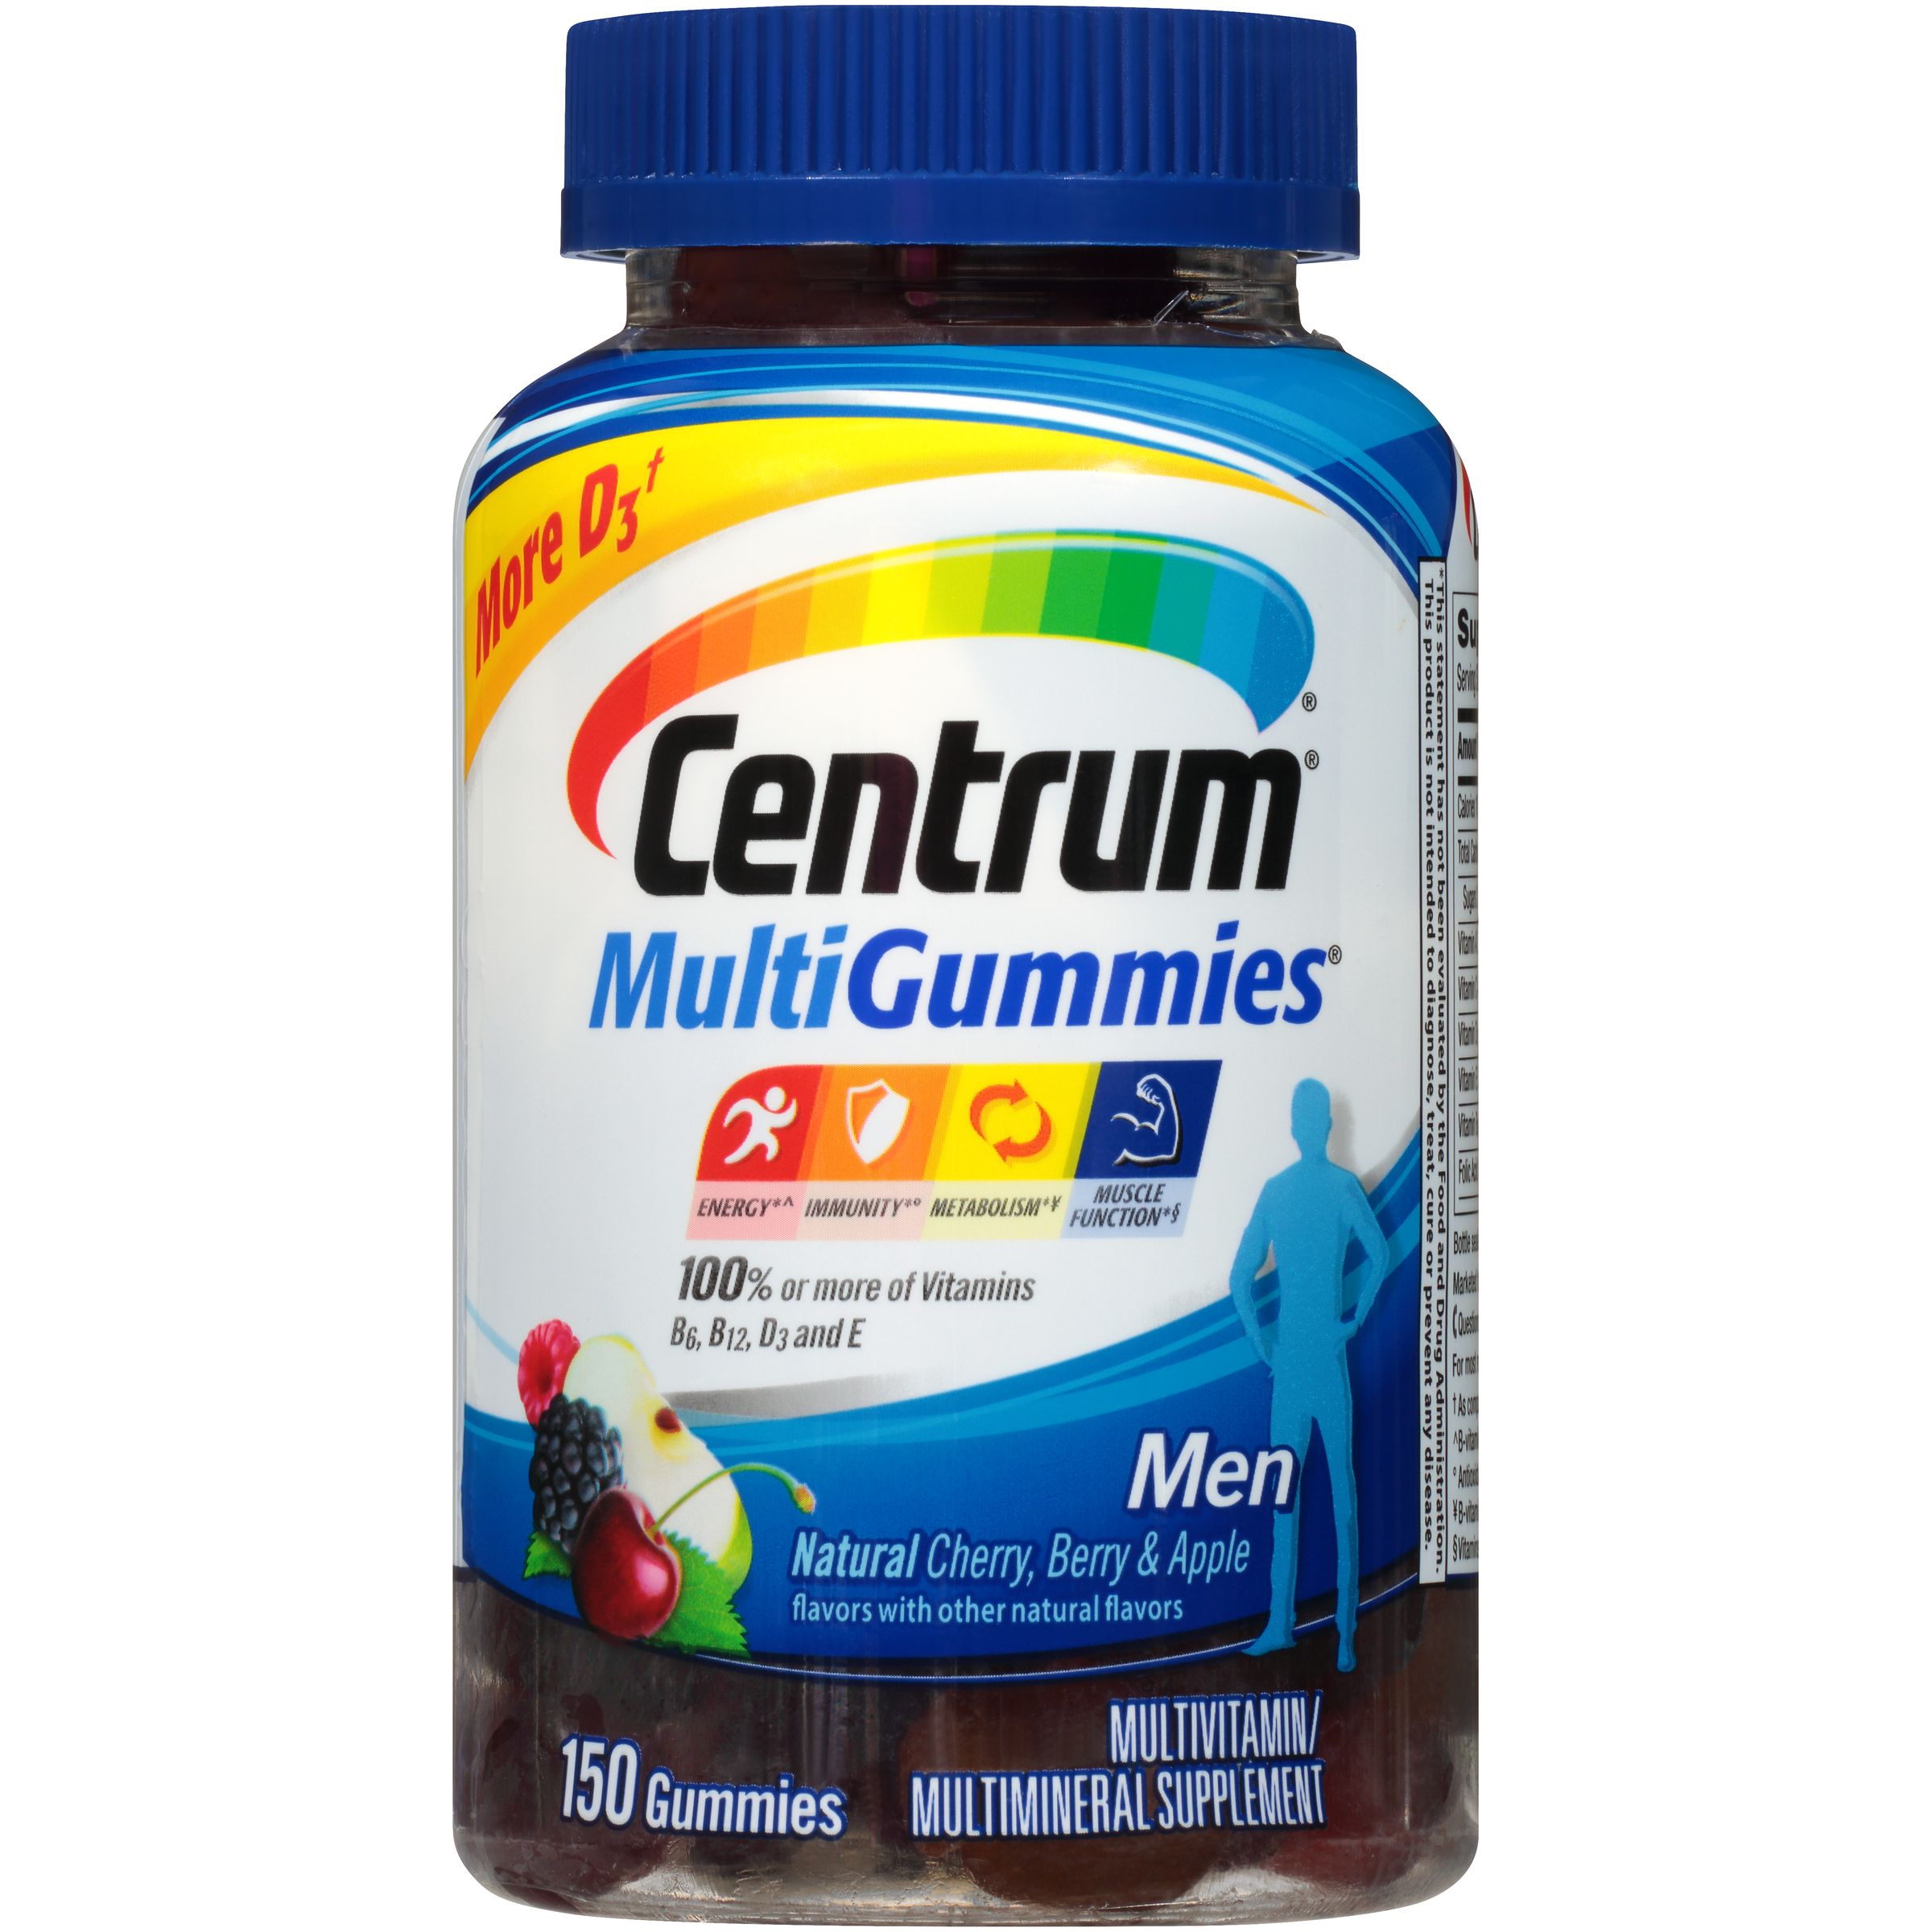 Centrum  Men MultiGummies Multivitamin/Multimineral Supplement